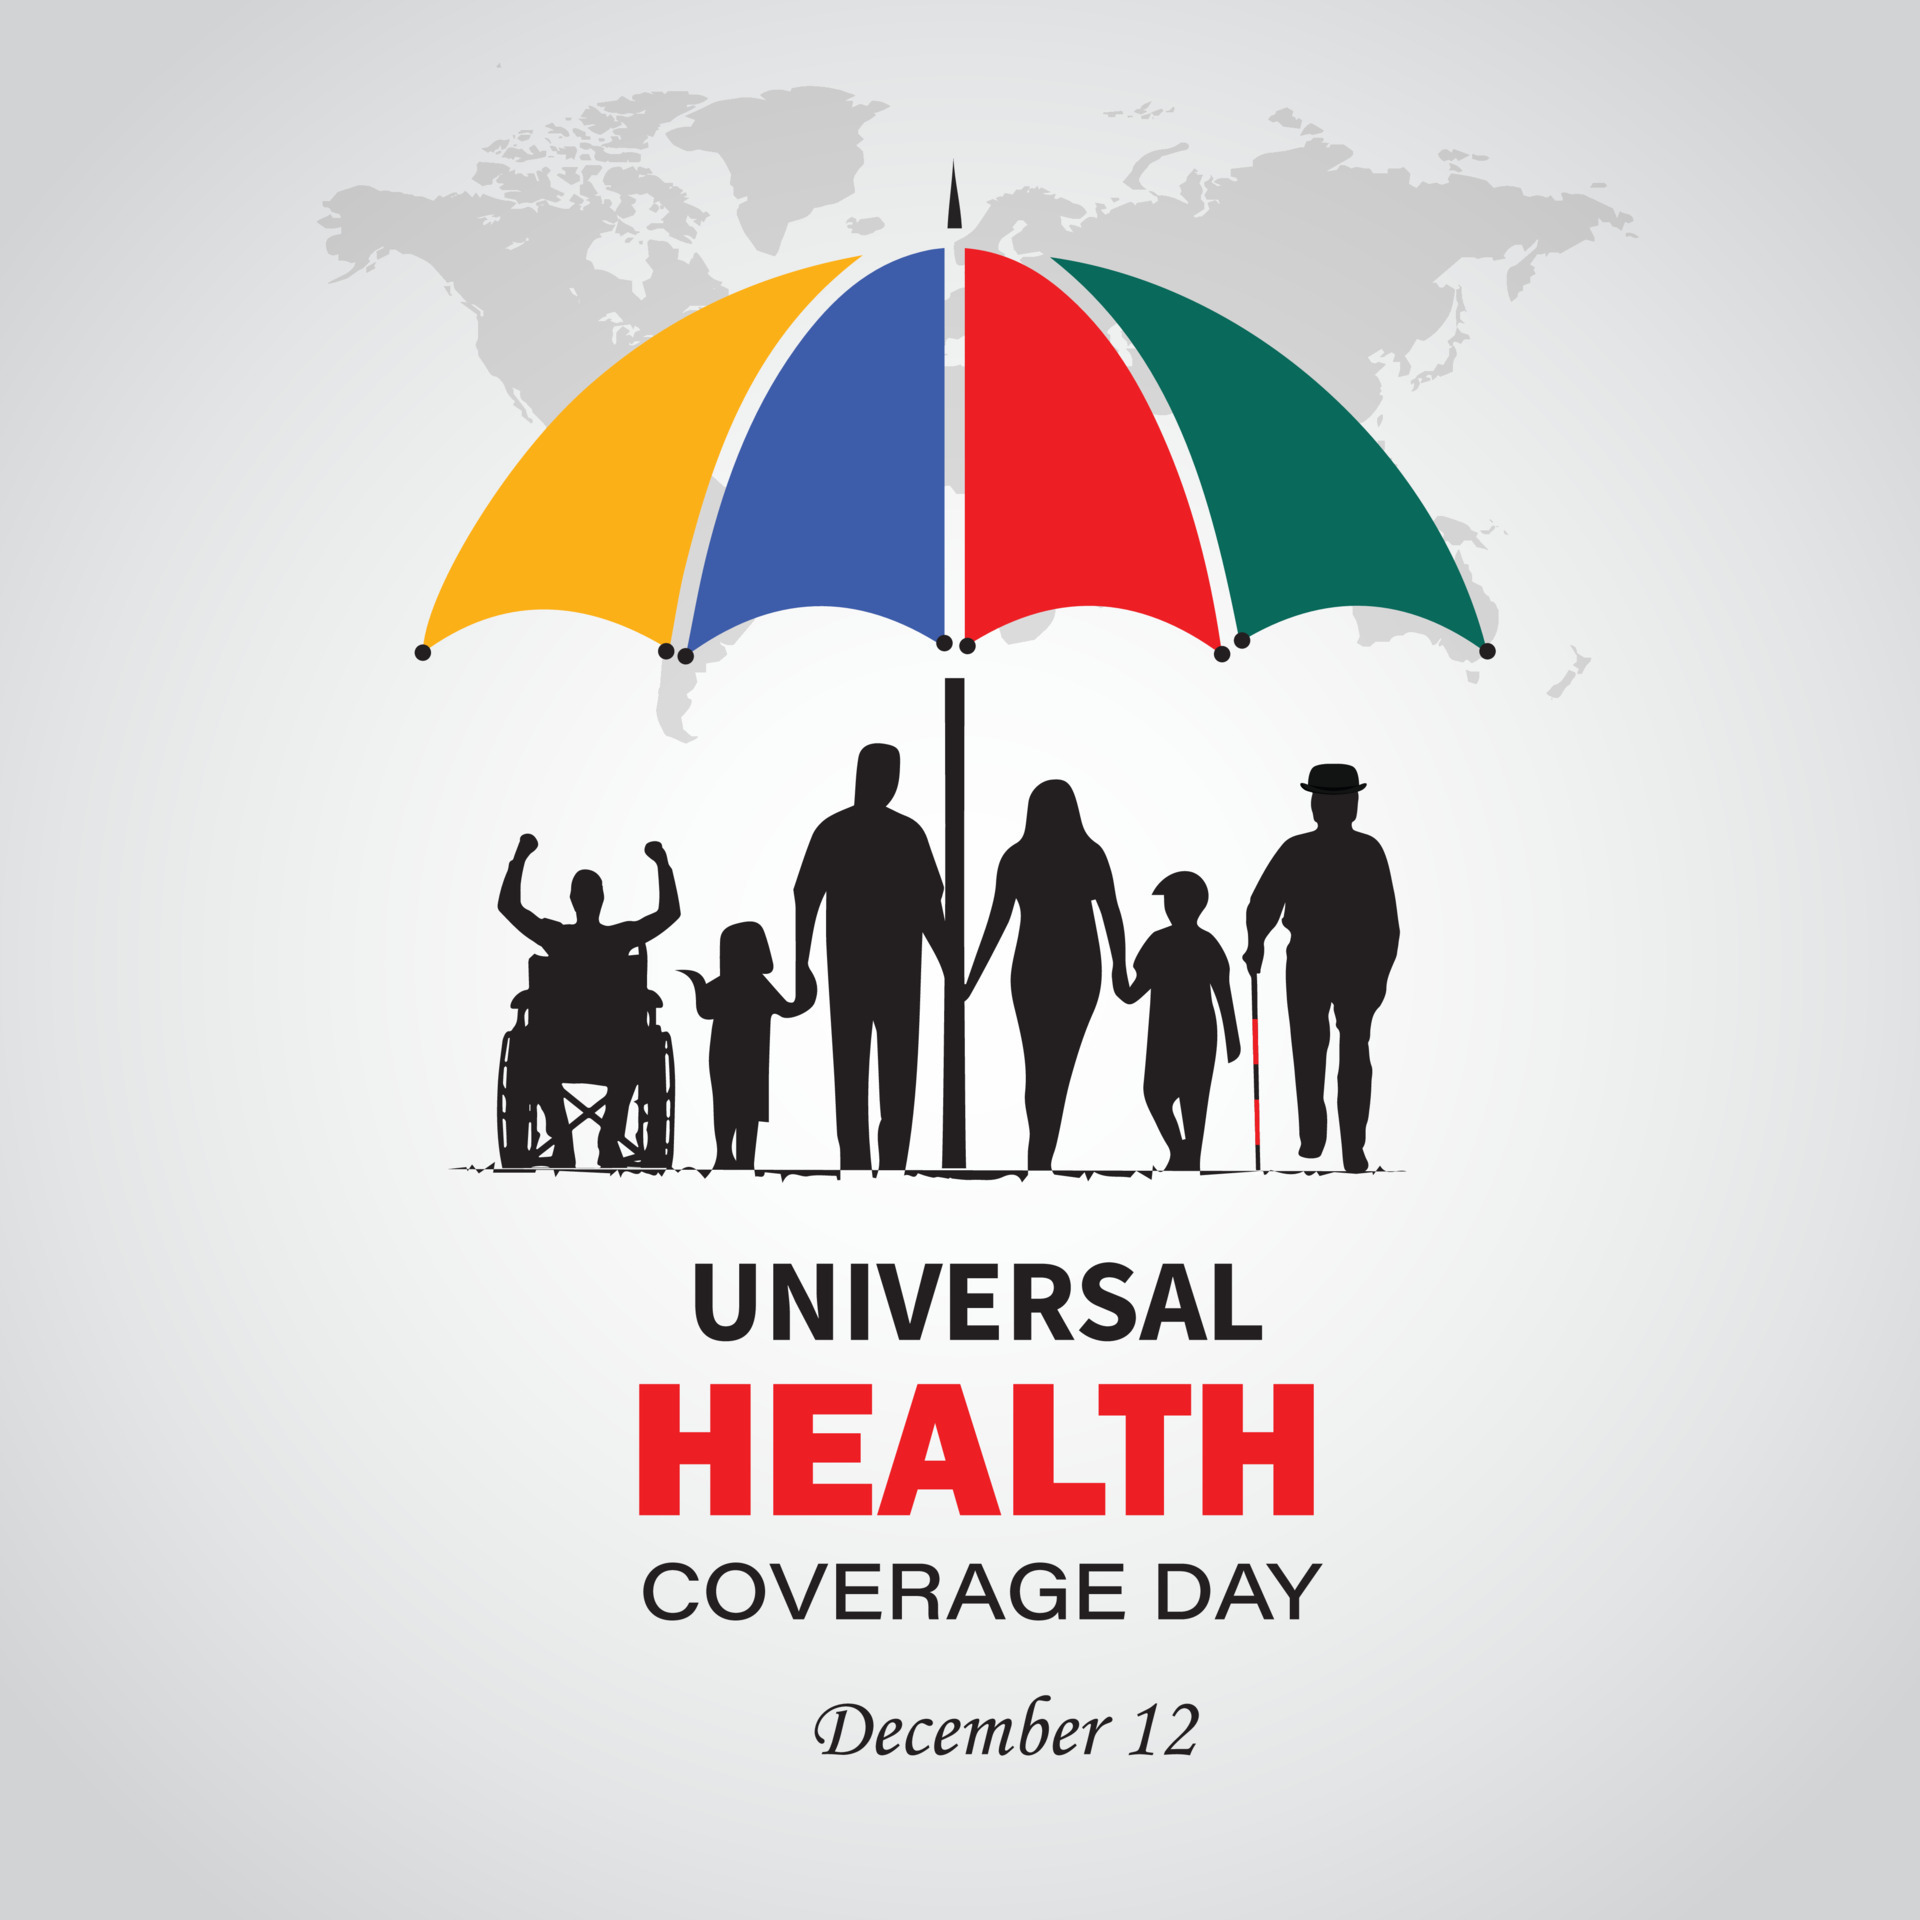 speech on universal health coverage day